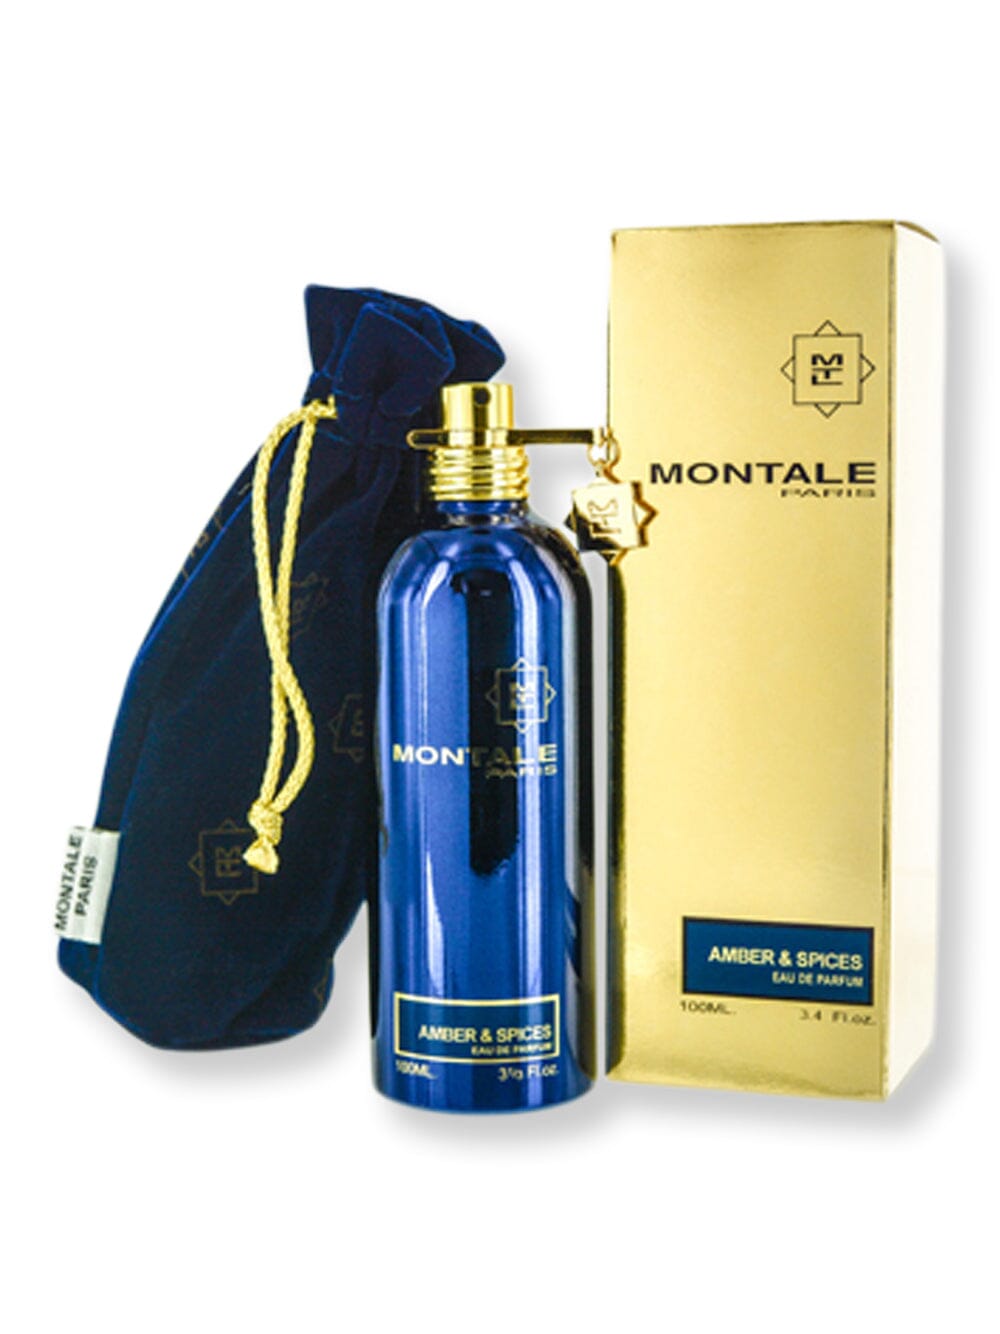 Montale Montale Amber & Spices EDP Spray 3.3 oz100 ml Perfume 